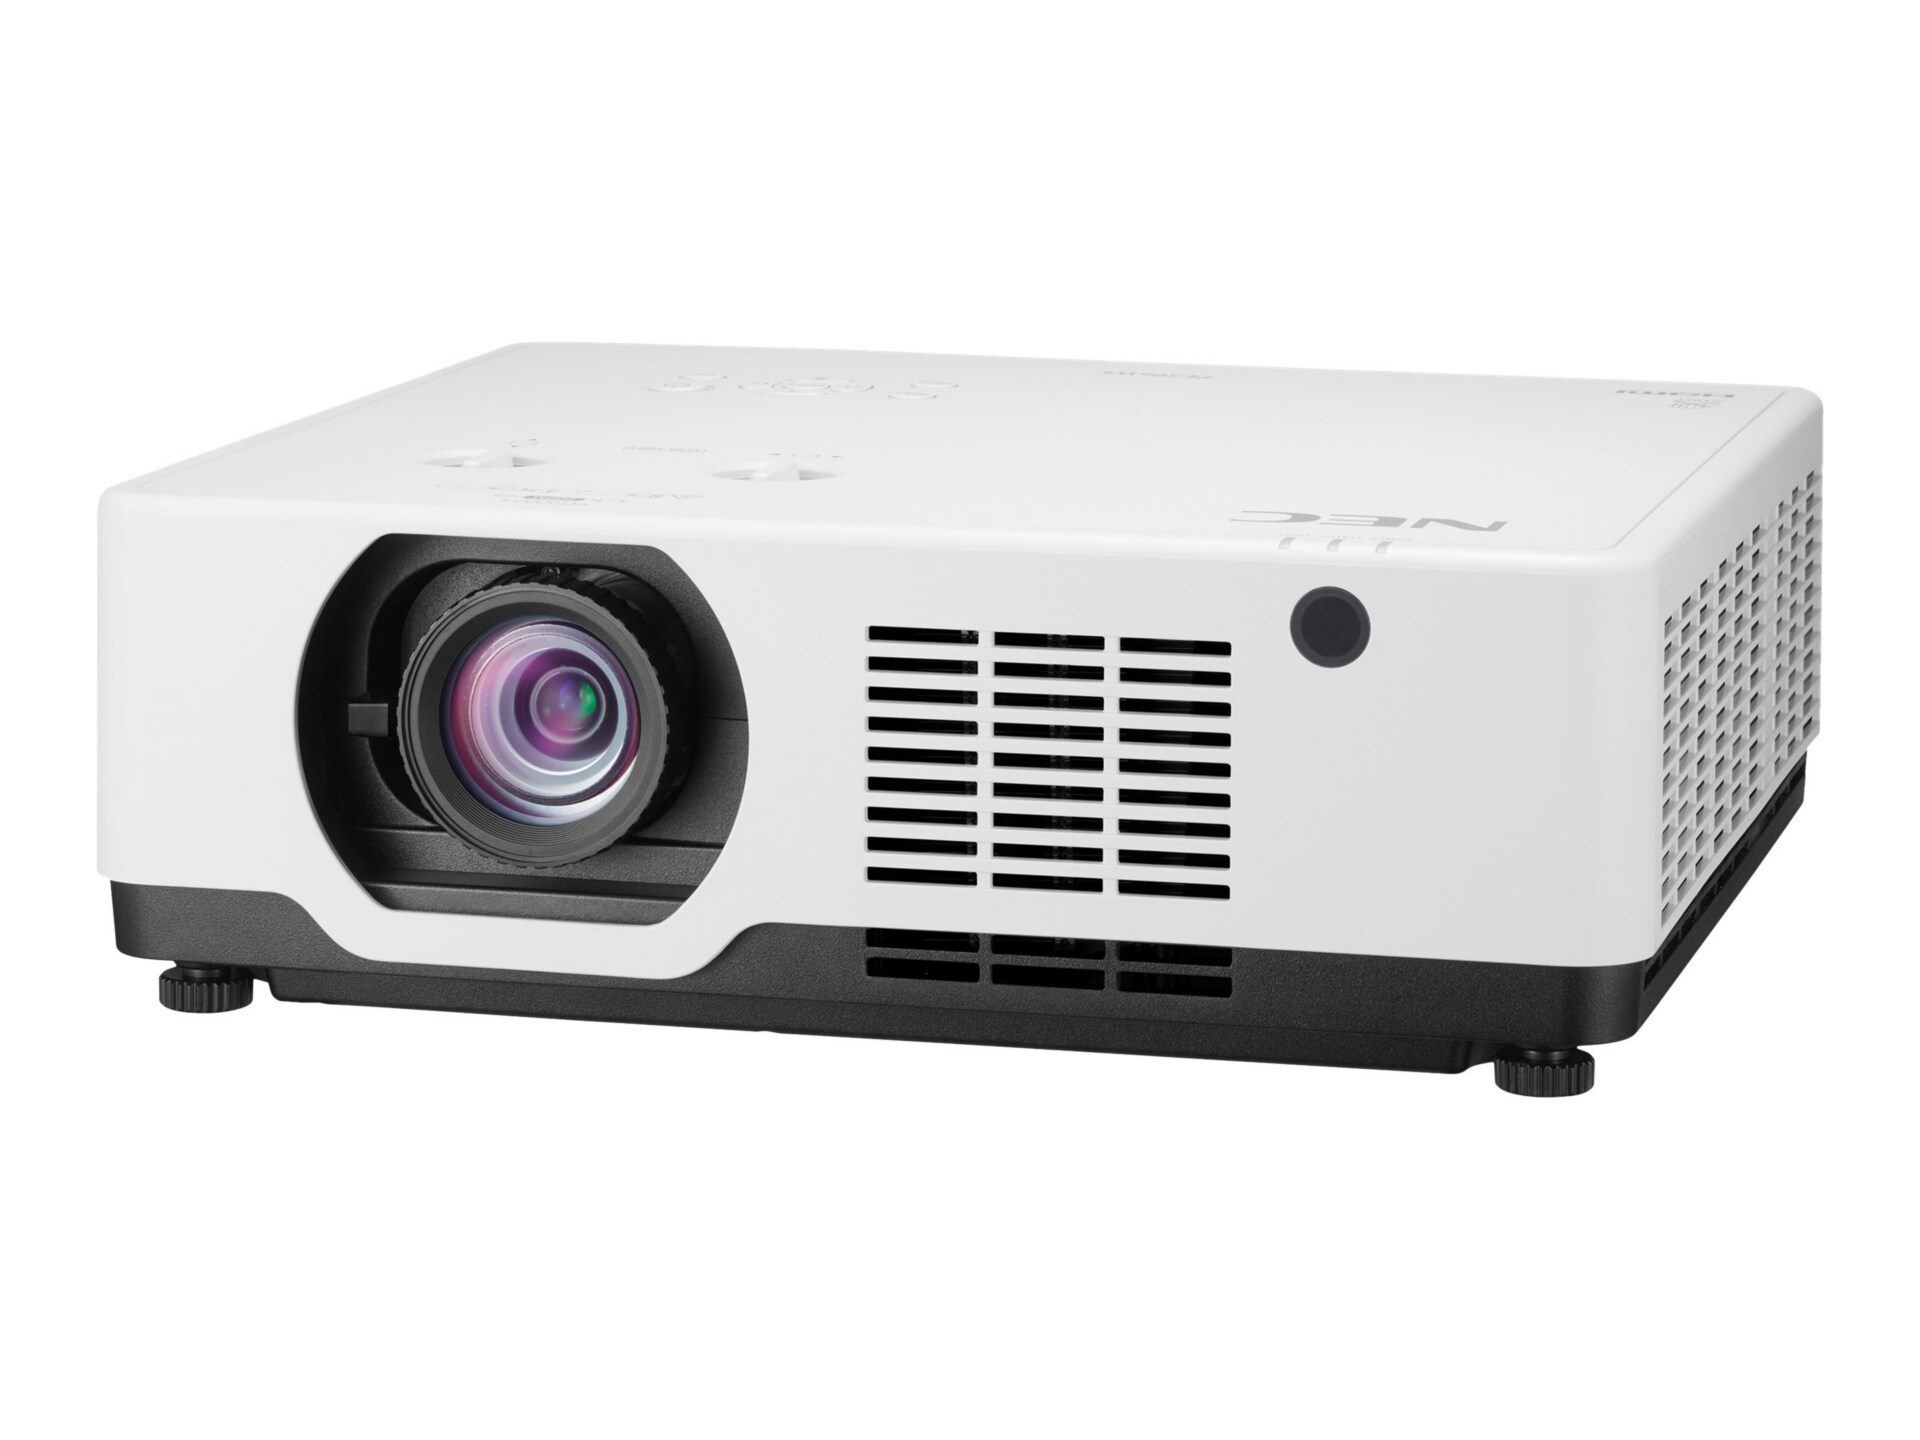 NEC NP-PE506WL - LCD projector - zoom lens - LAN